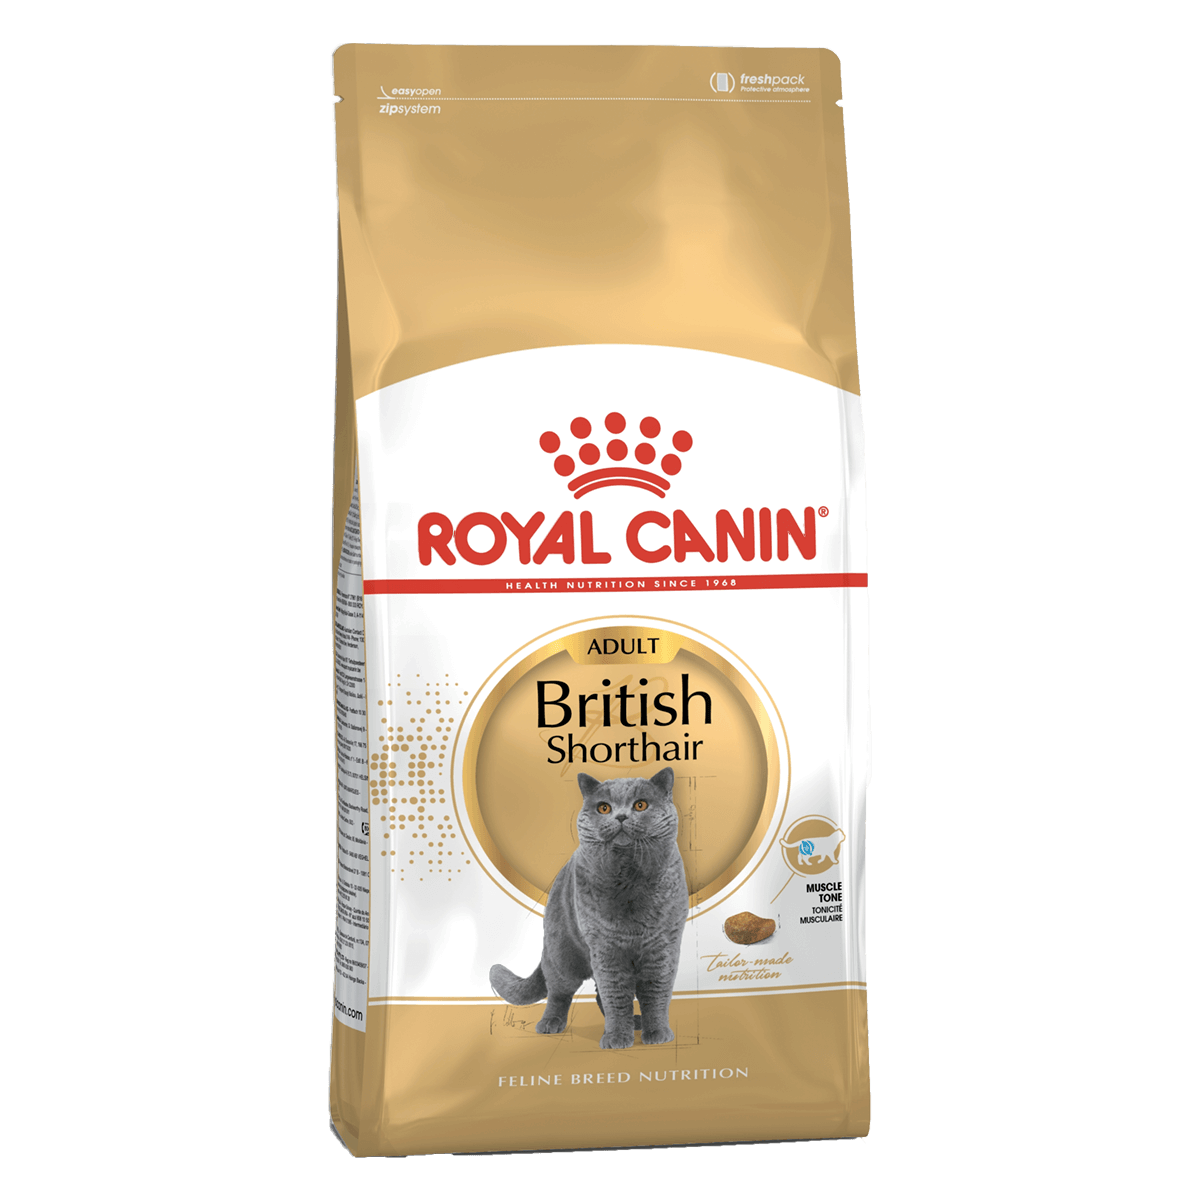 Royal Canin British Shorthair, 10 кг - корм Роял Канин для британских короткошерстных кошек